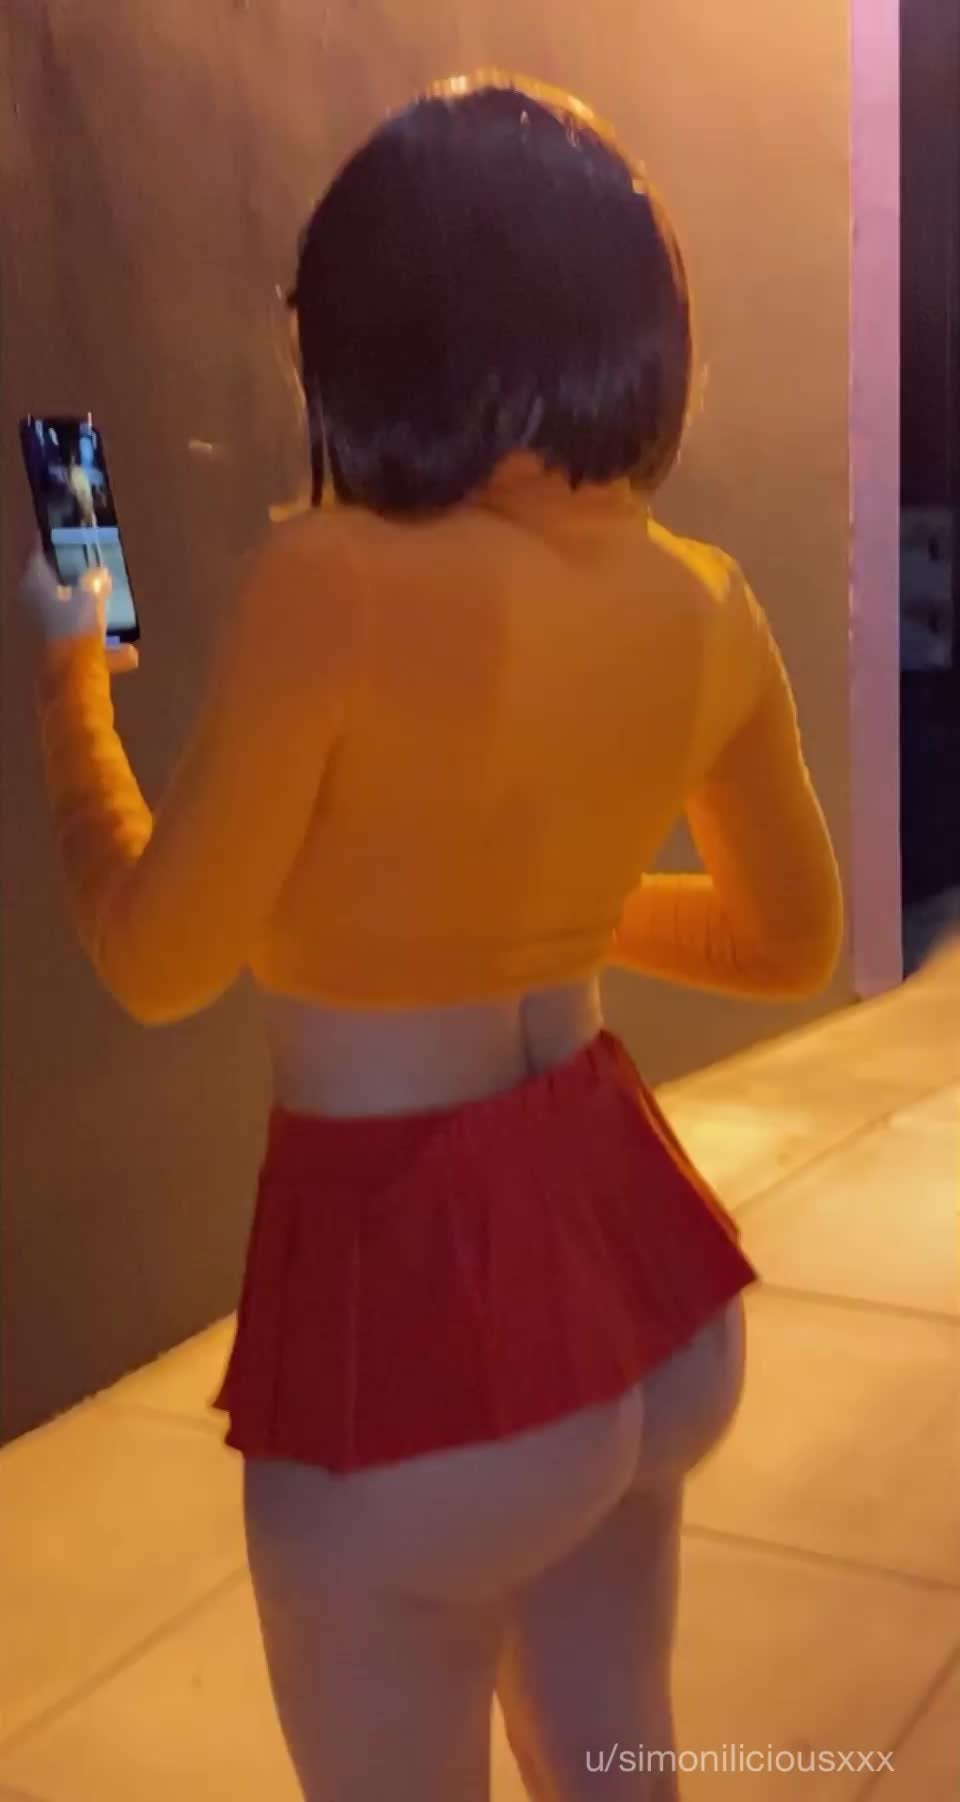 Velmas thick ass